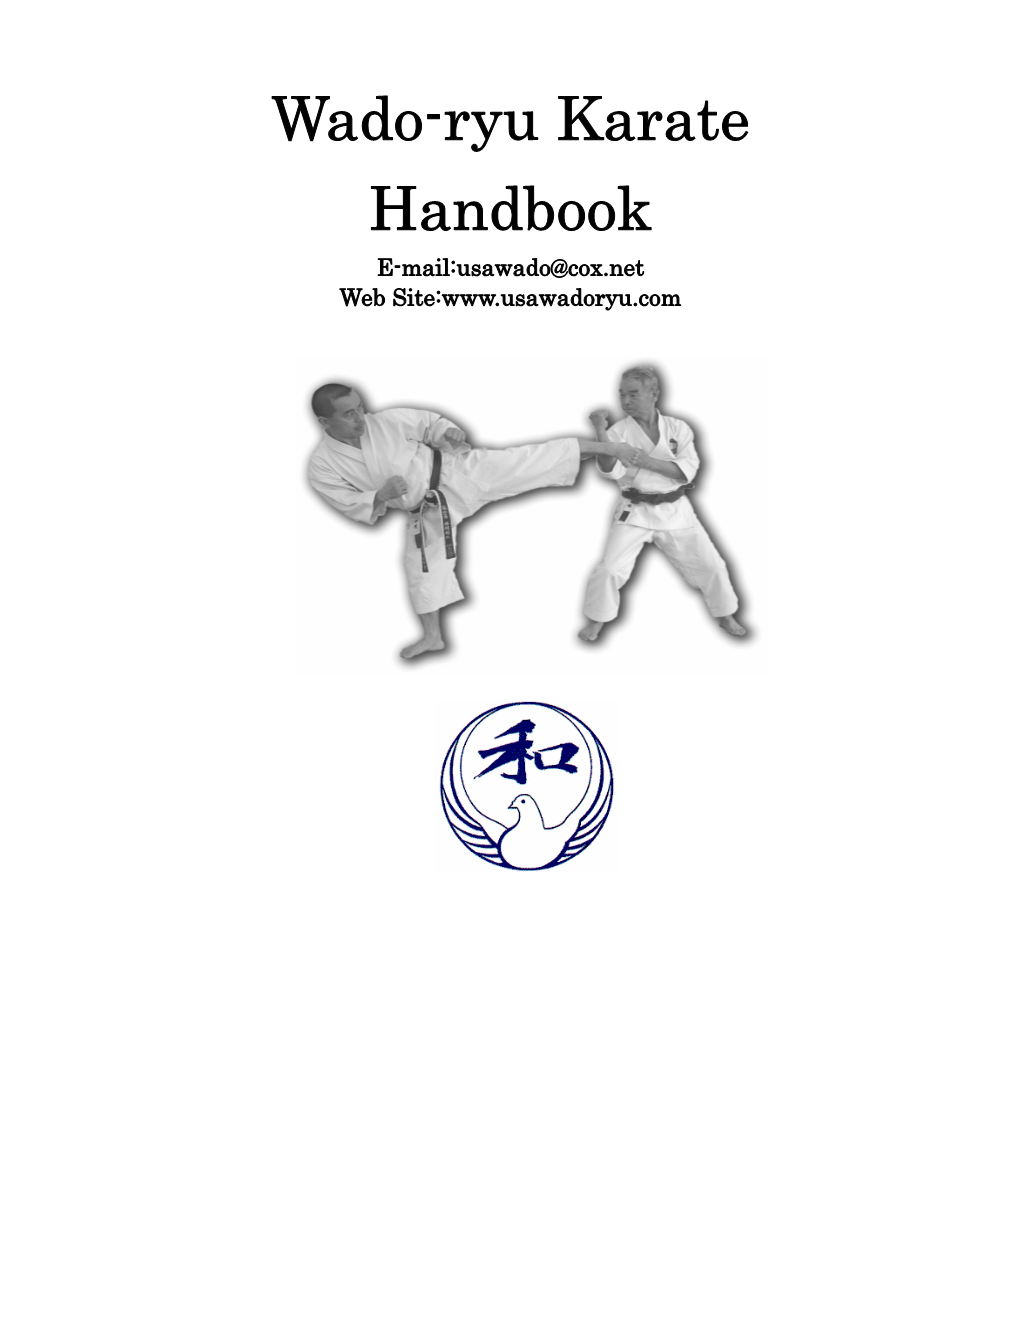 Wado-Ryu Karate Handbook